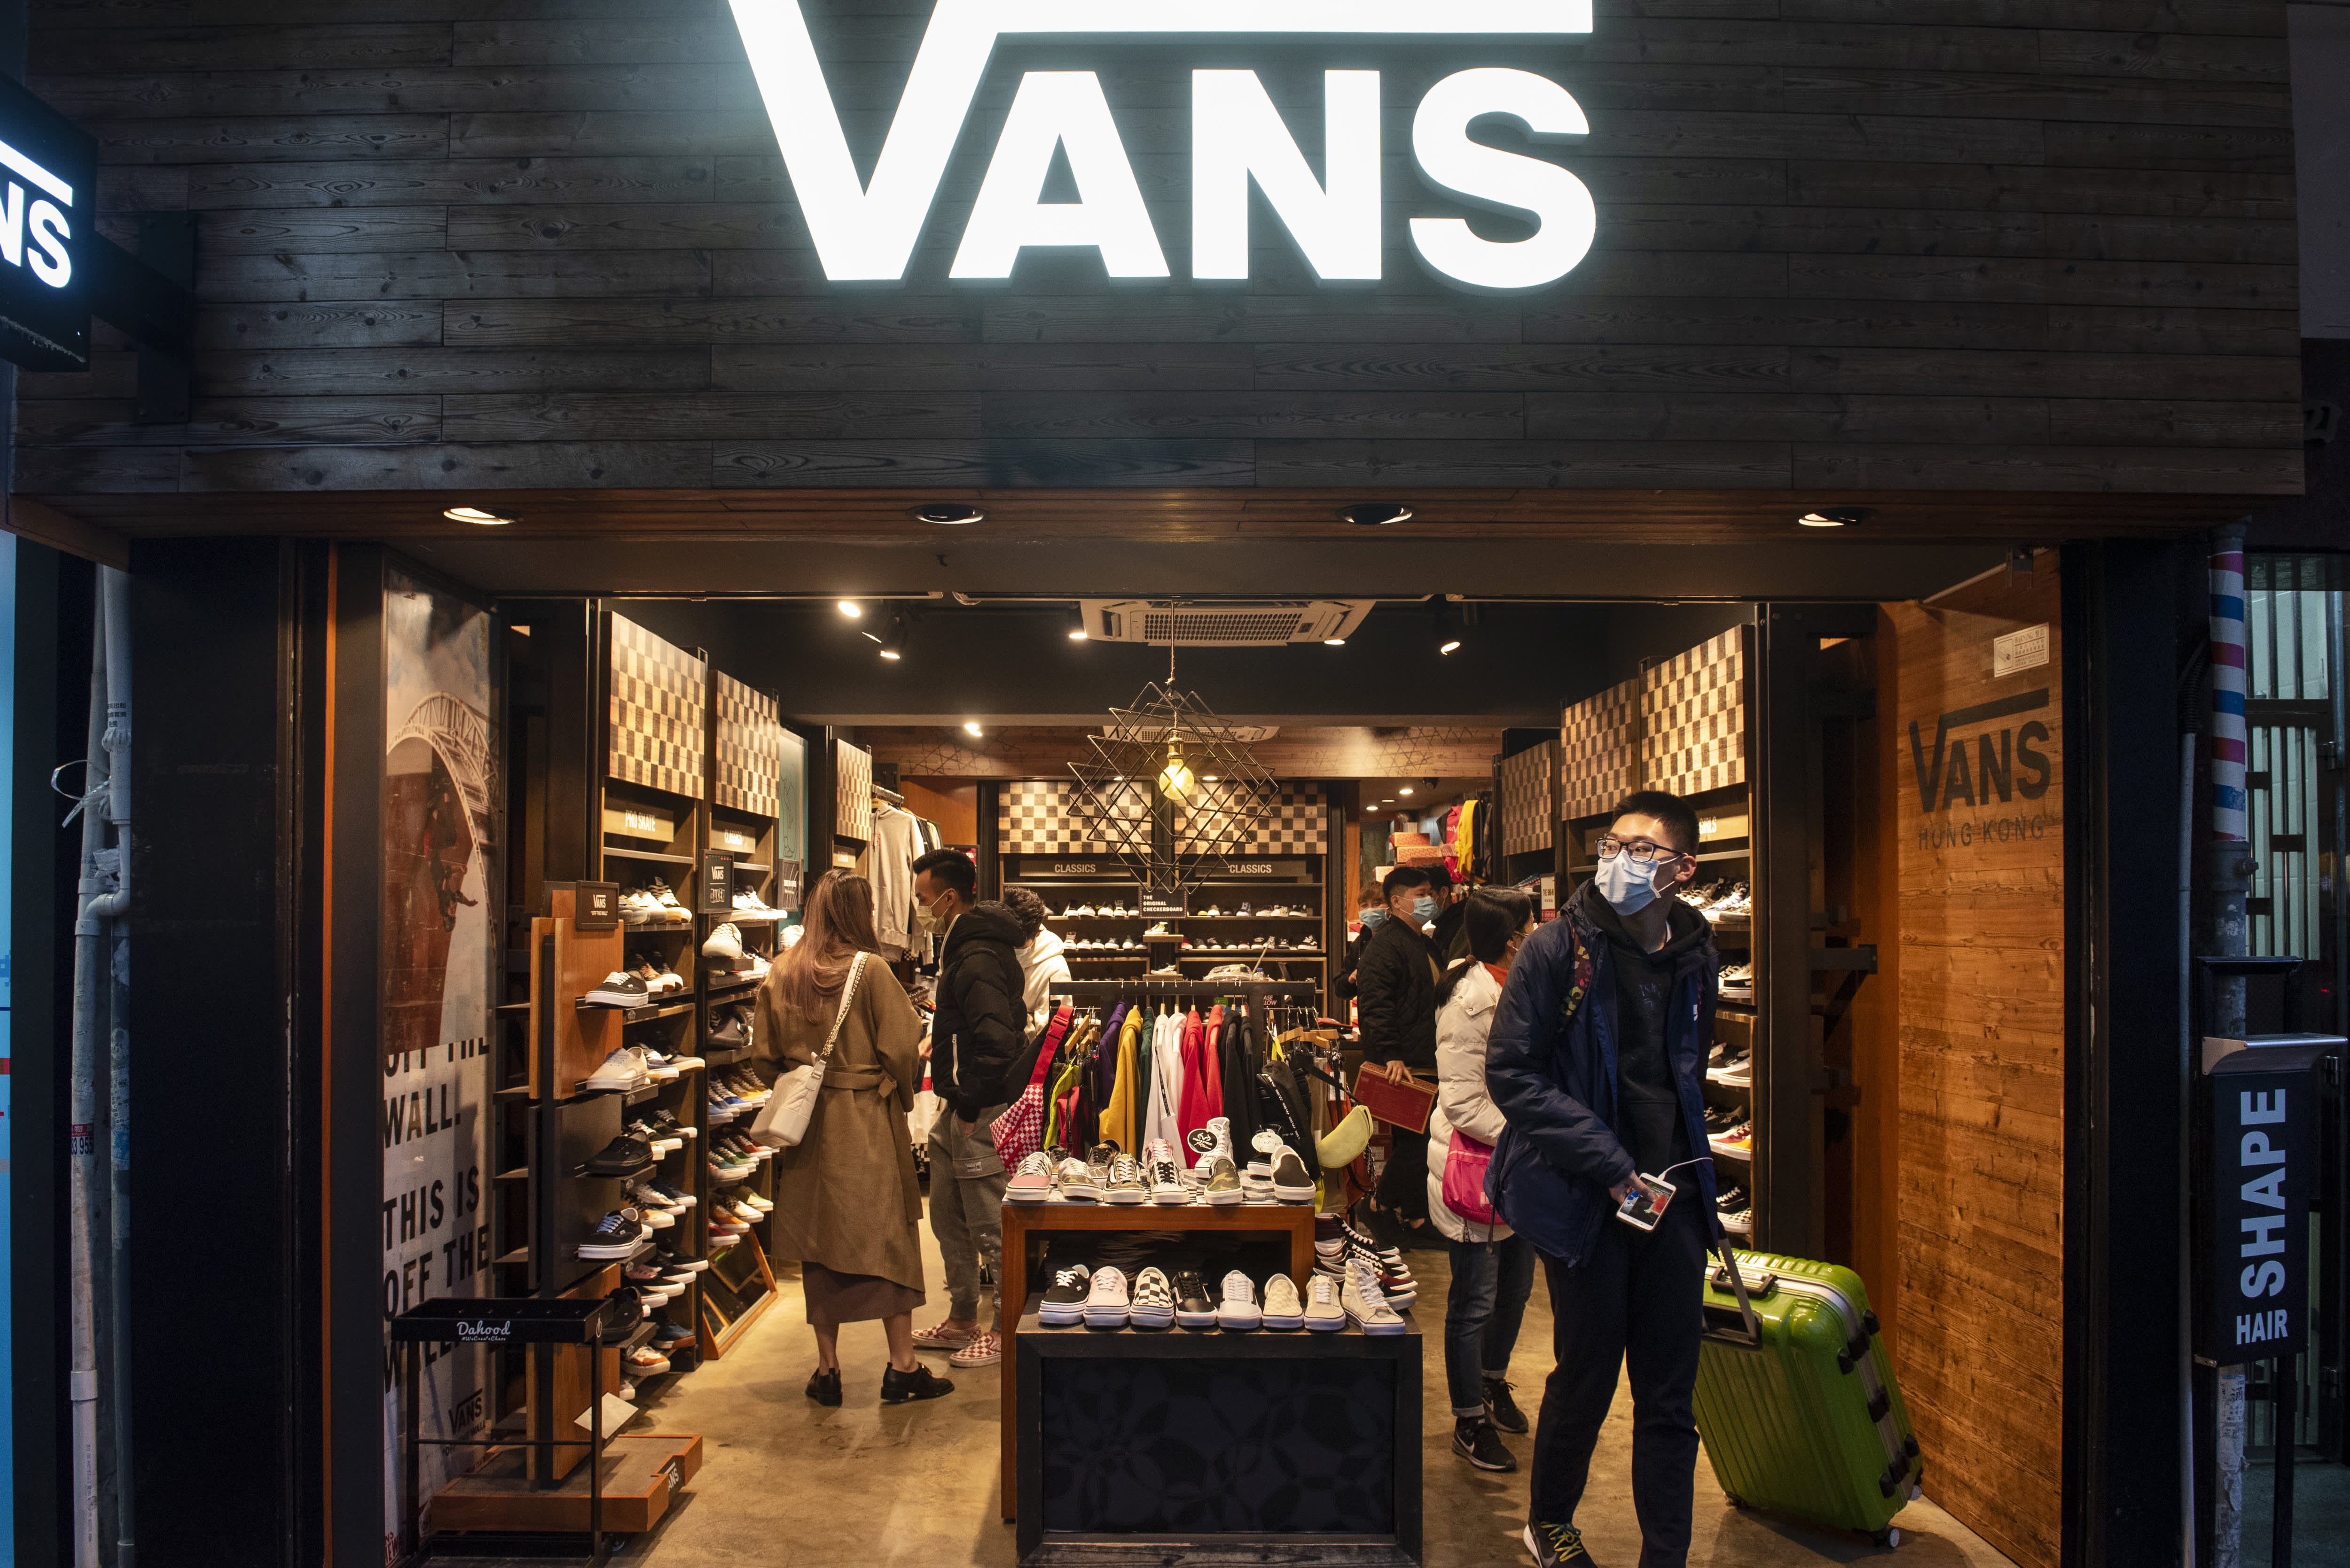 Vans sneaker maker's revenue, profit 